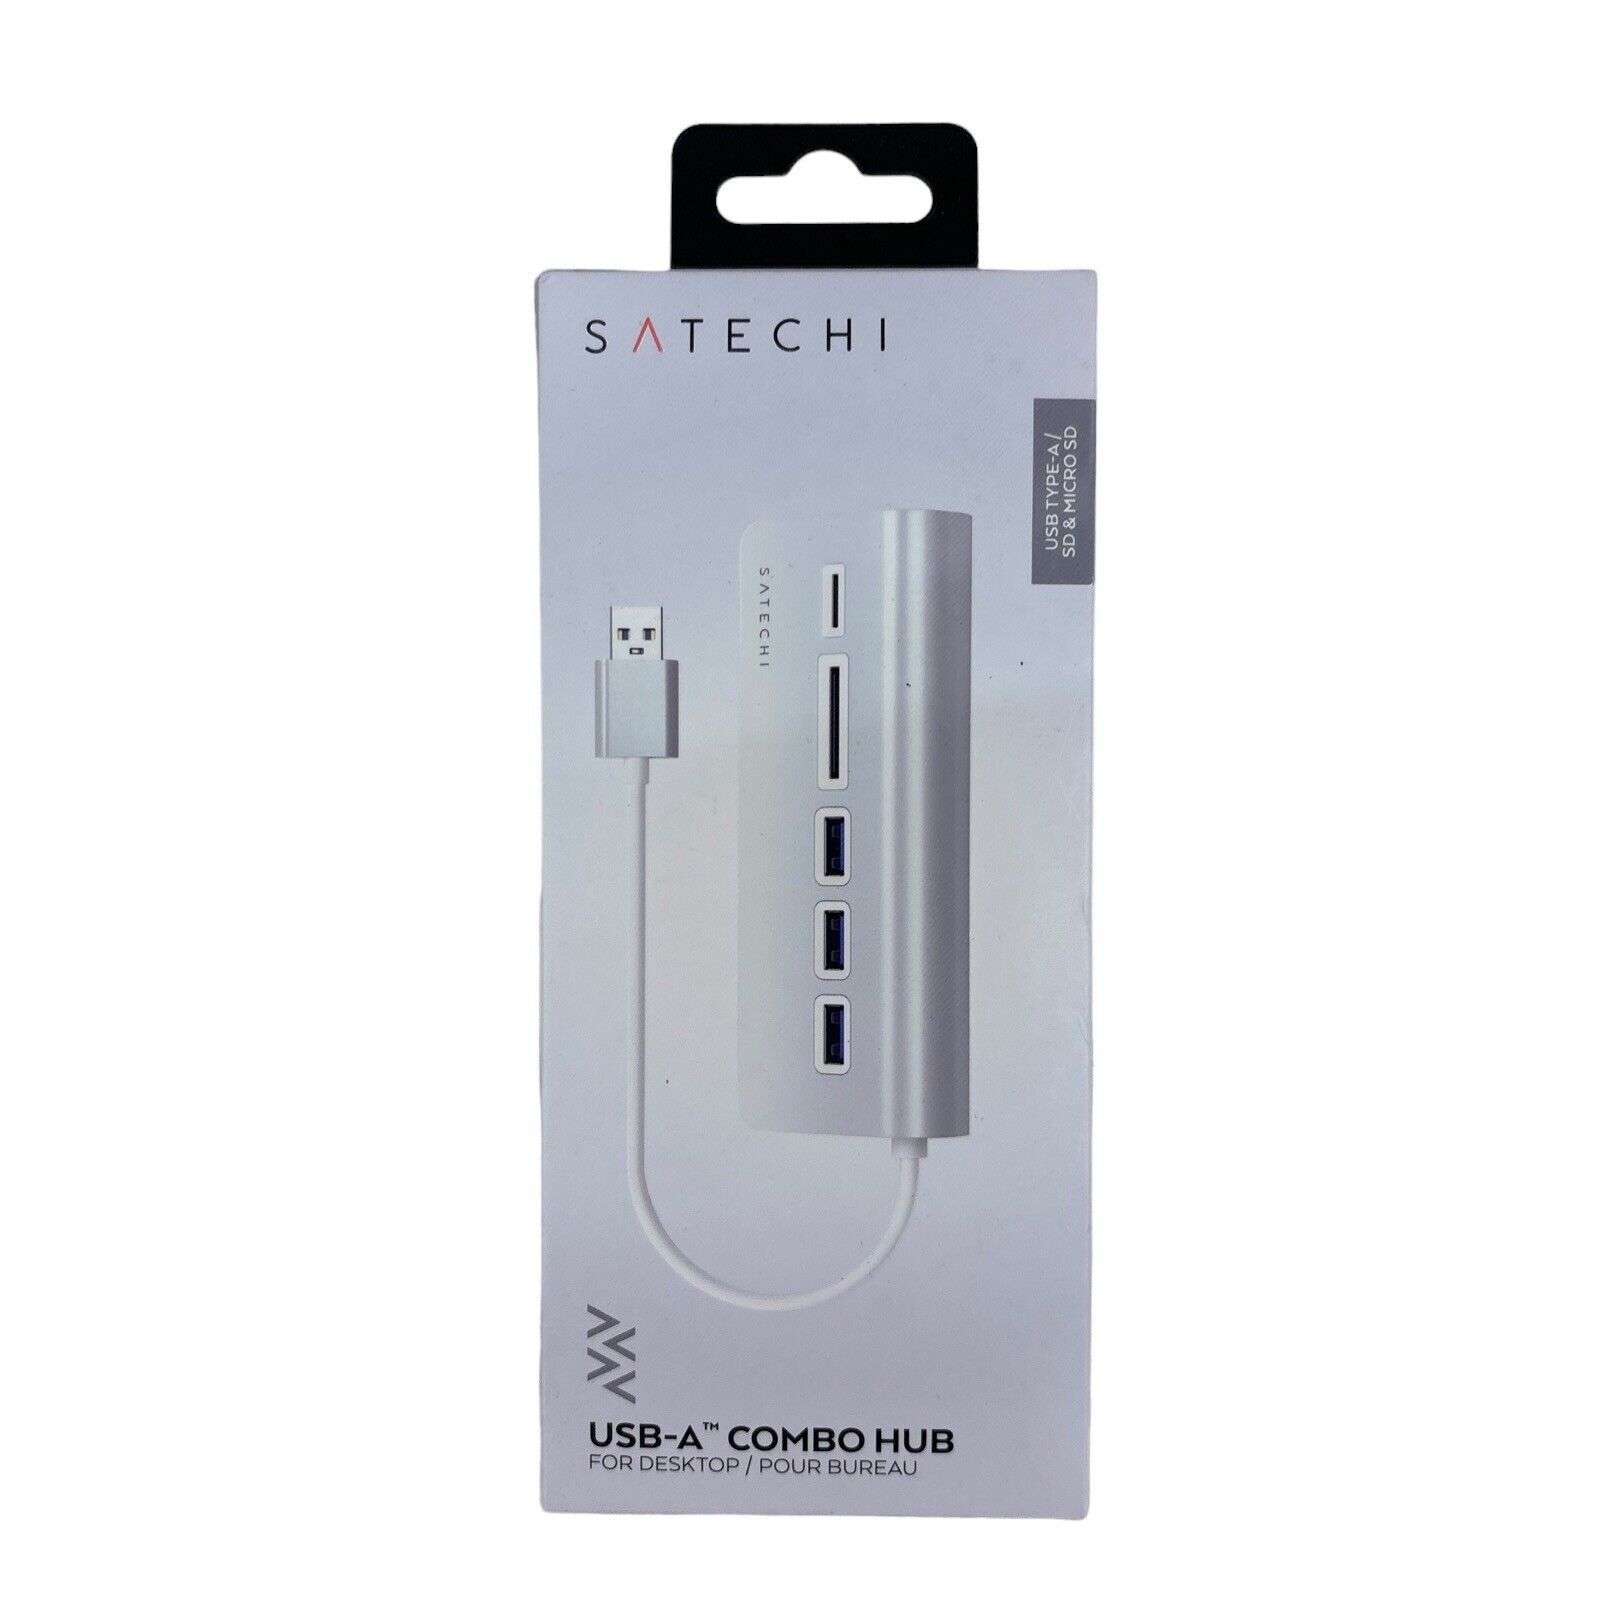 Satechi Aluminum USB 3.0 Hub with Card Reader Port #ST-3HCRS